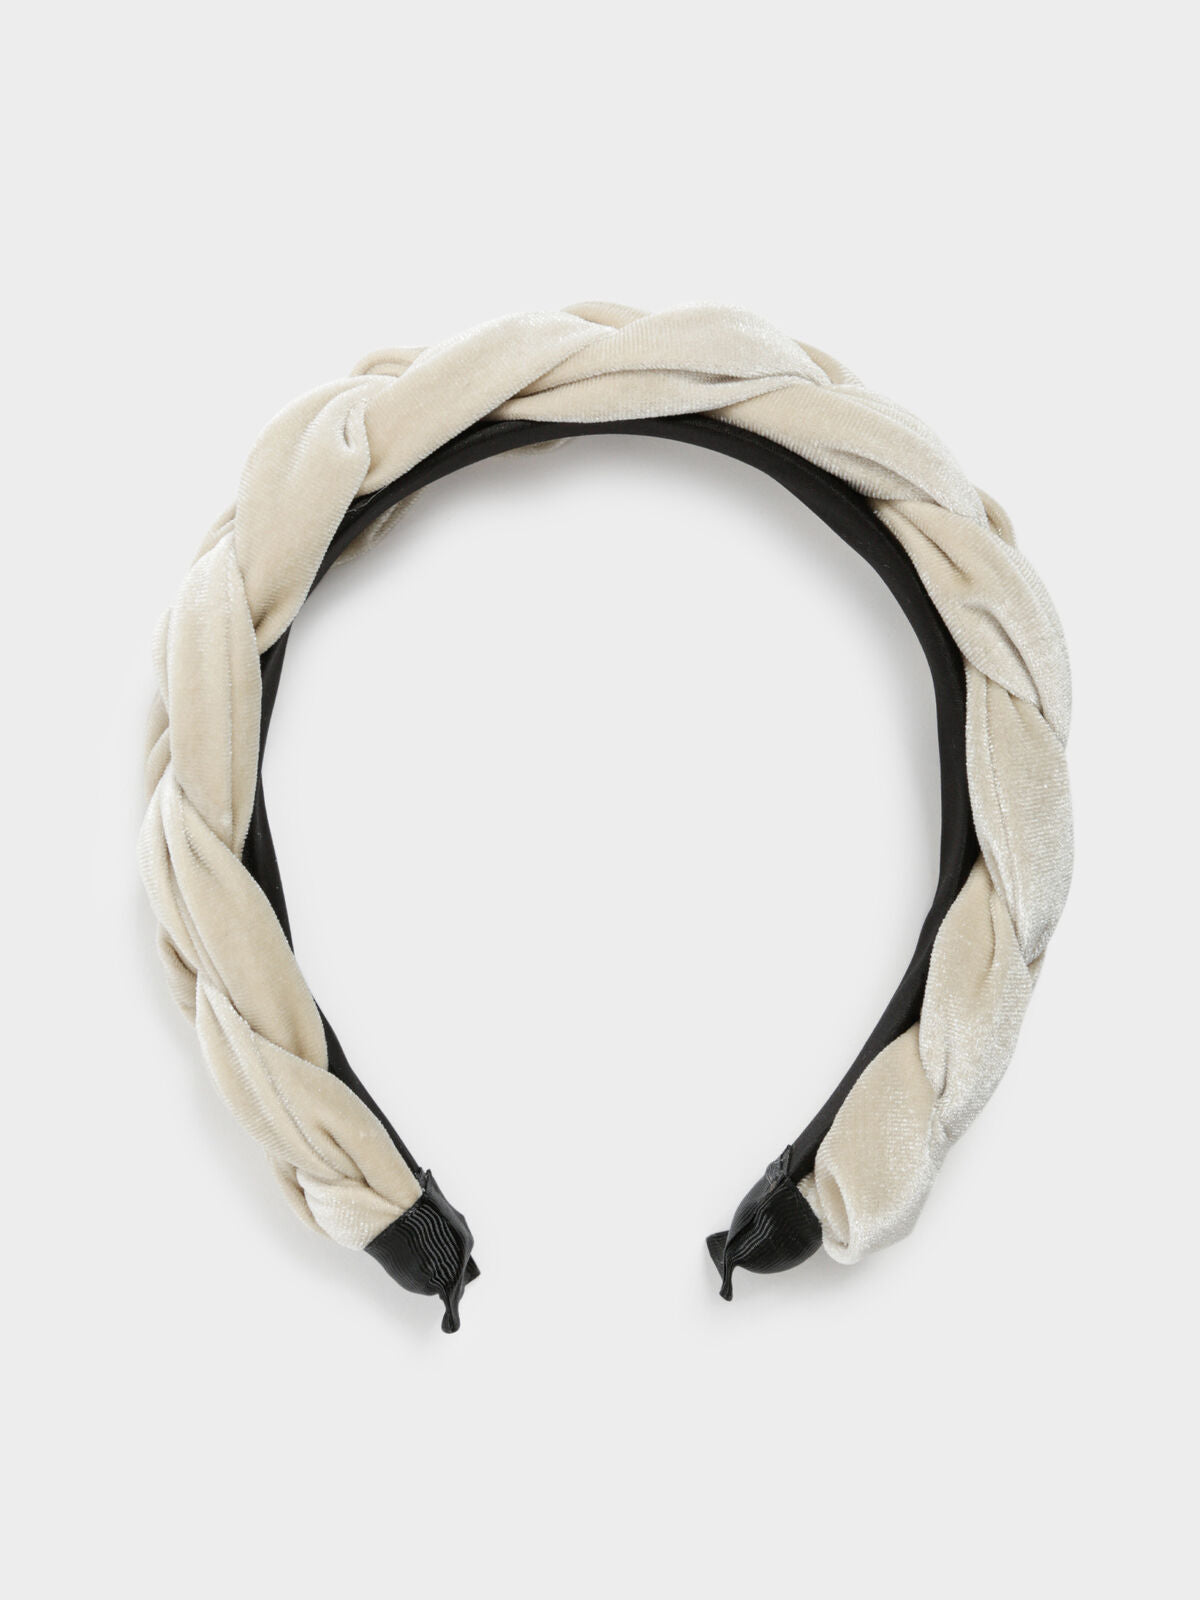 Velvet Plait Headband in Vanilla White